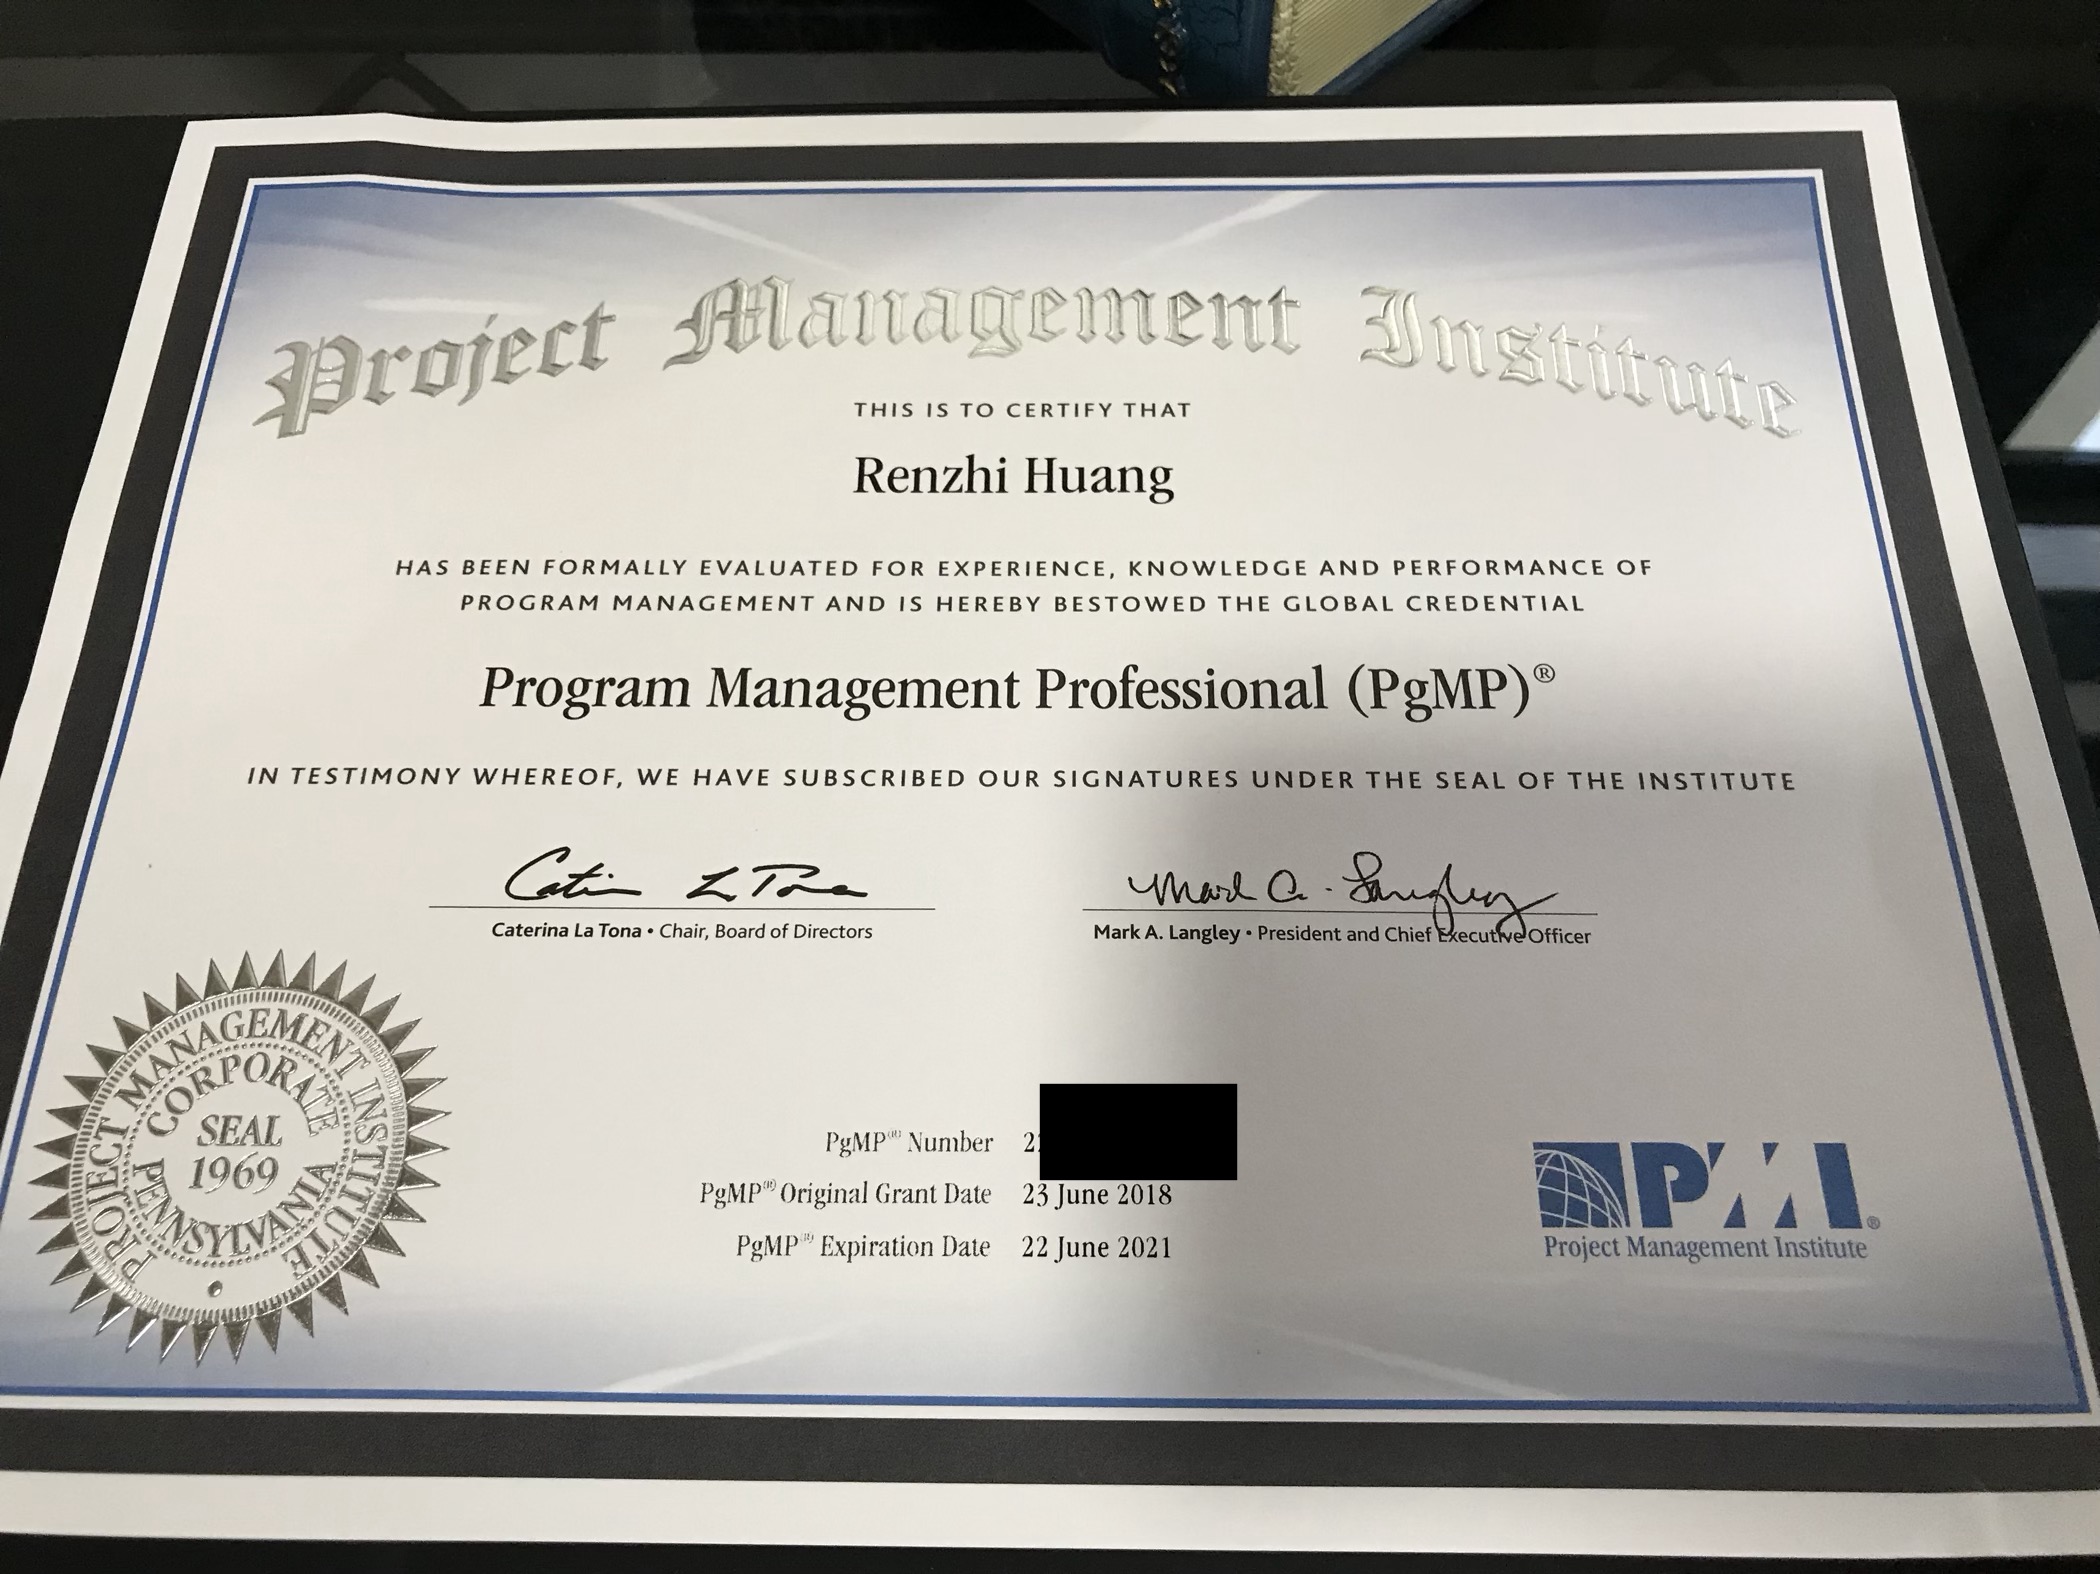 My PgMP program management professional certificate